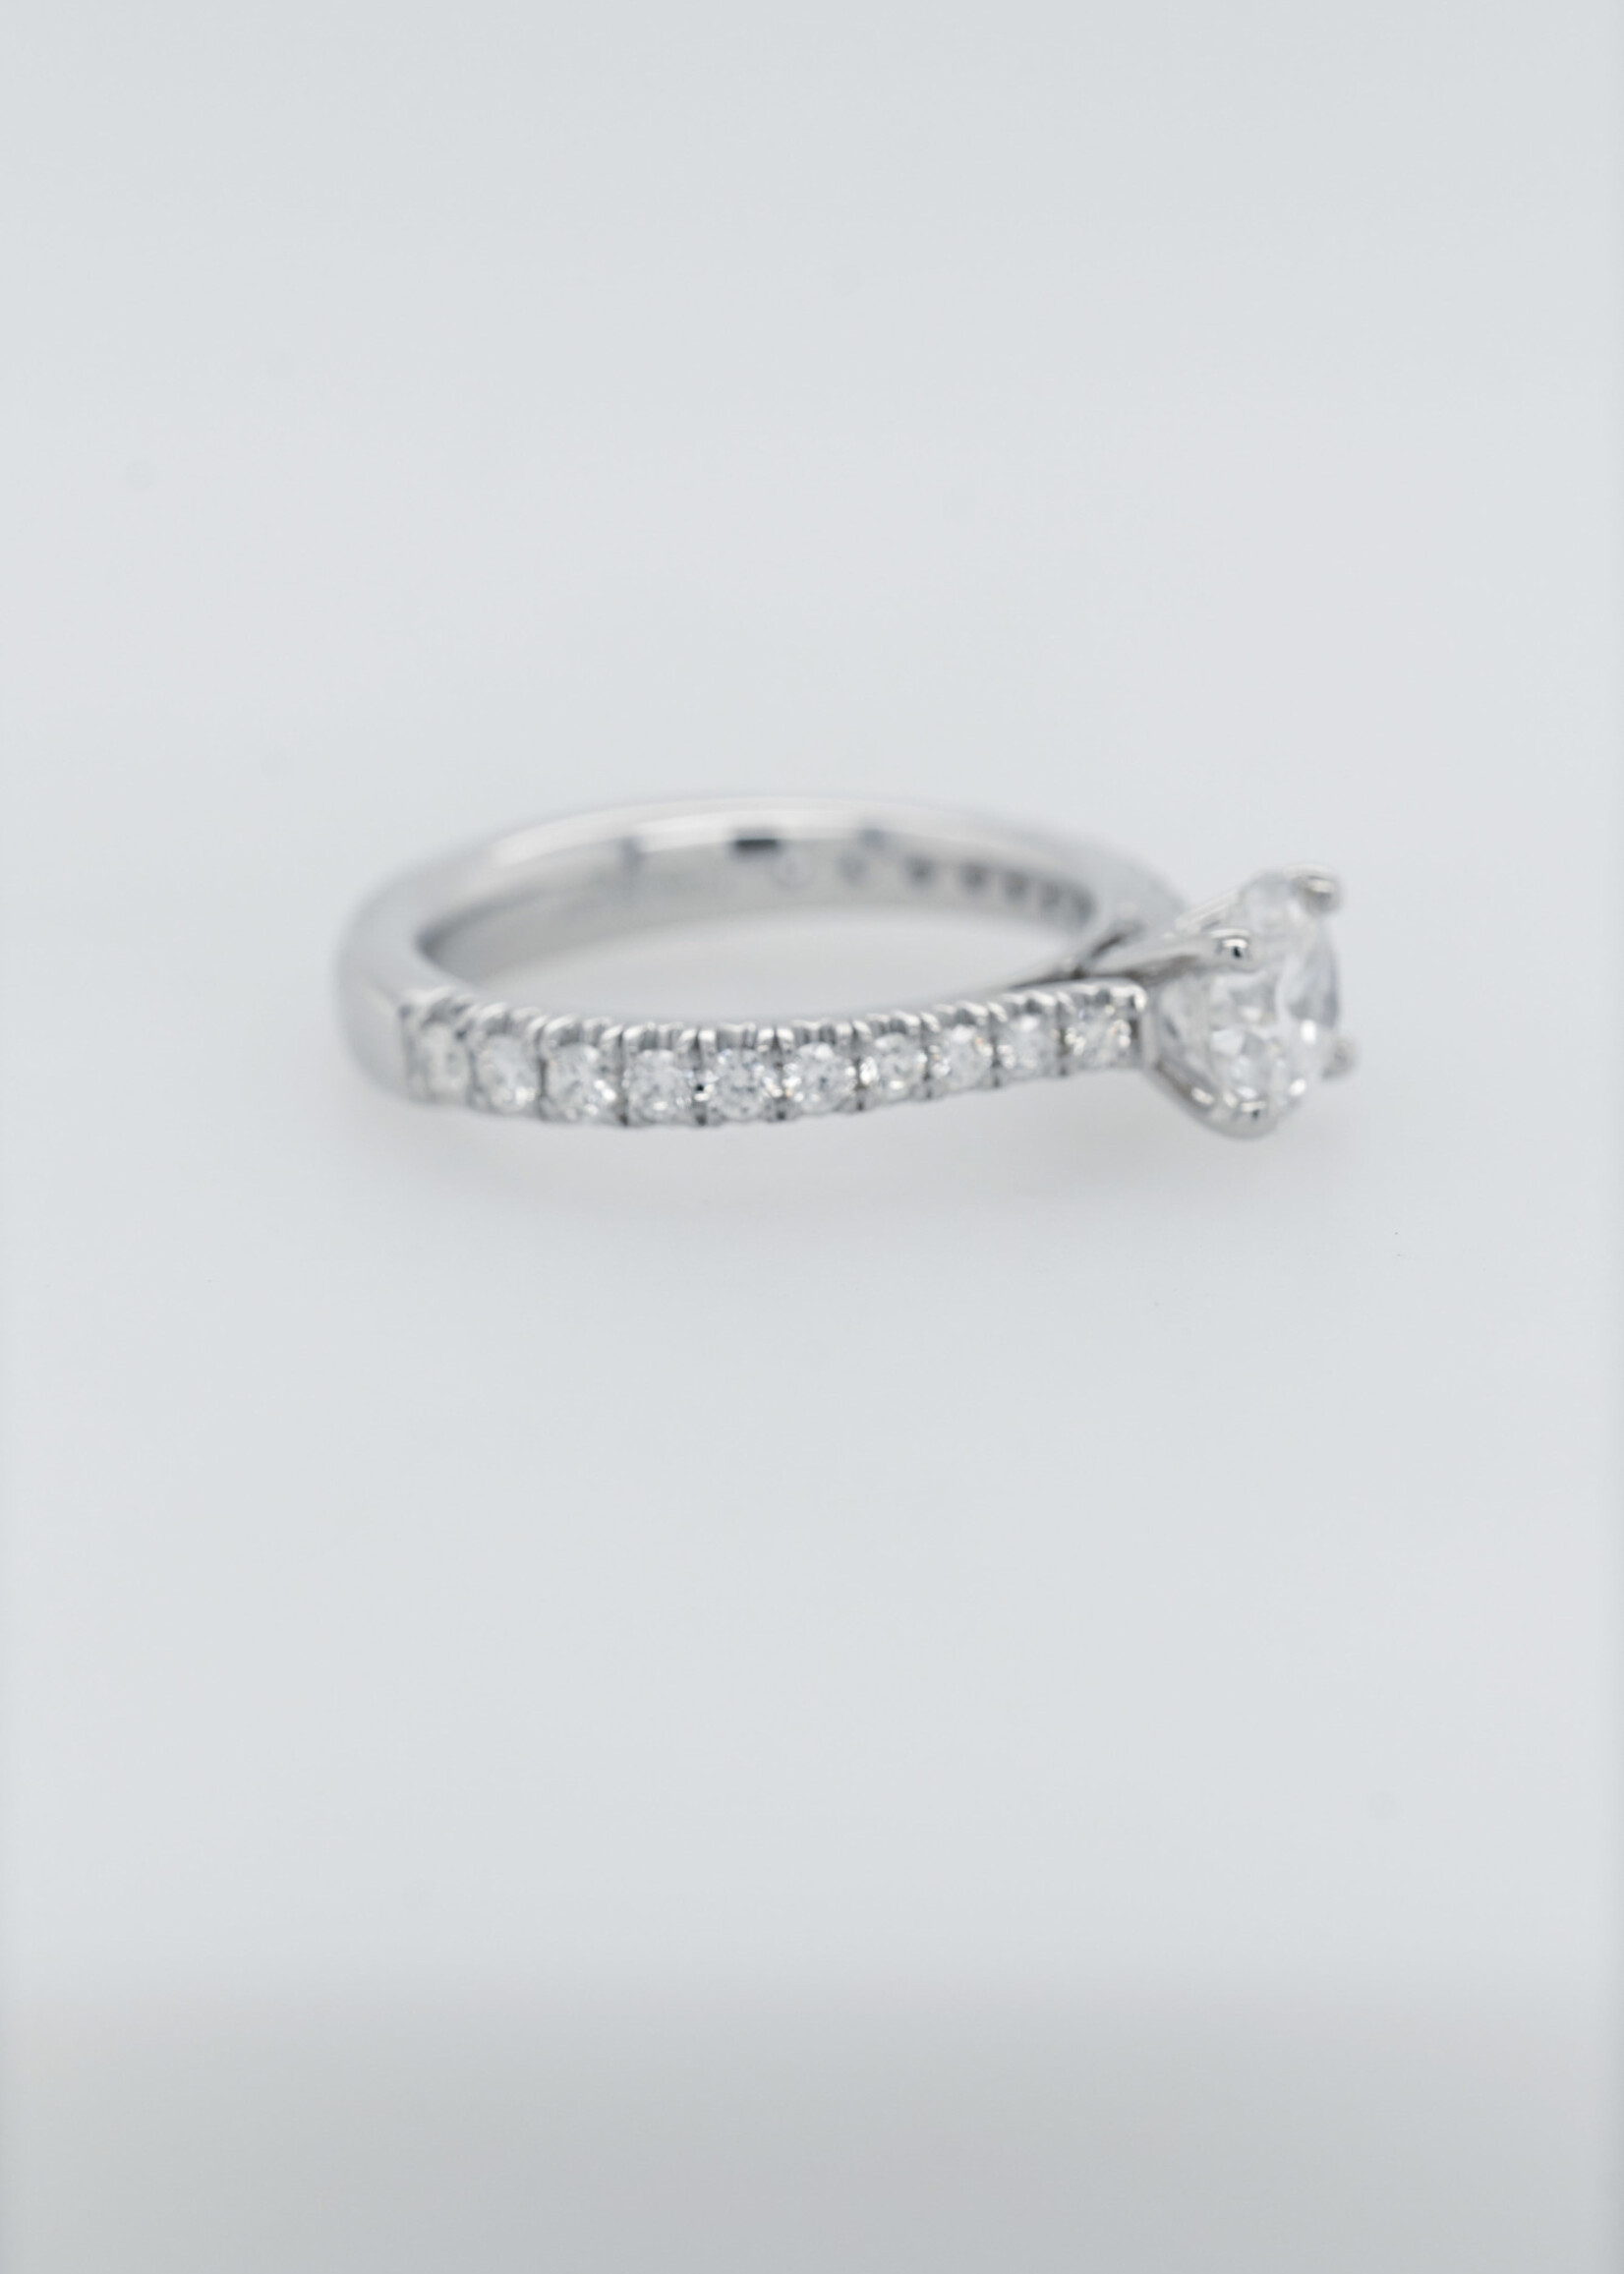 Platinum 8.13g 1.76ctw (1.26ctr) E/SI2 Old European Cut Diamond Engagement Ring (size 7)